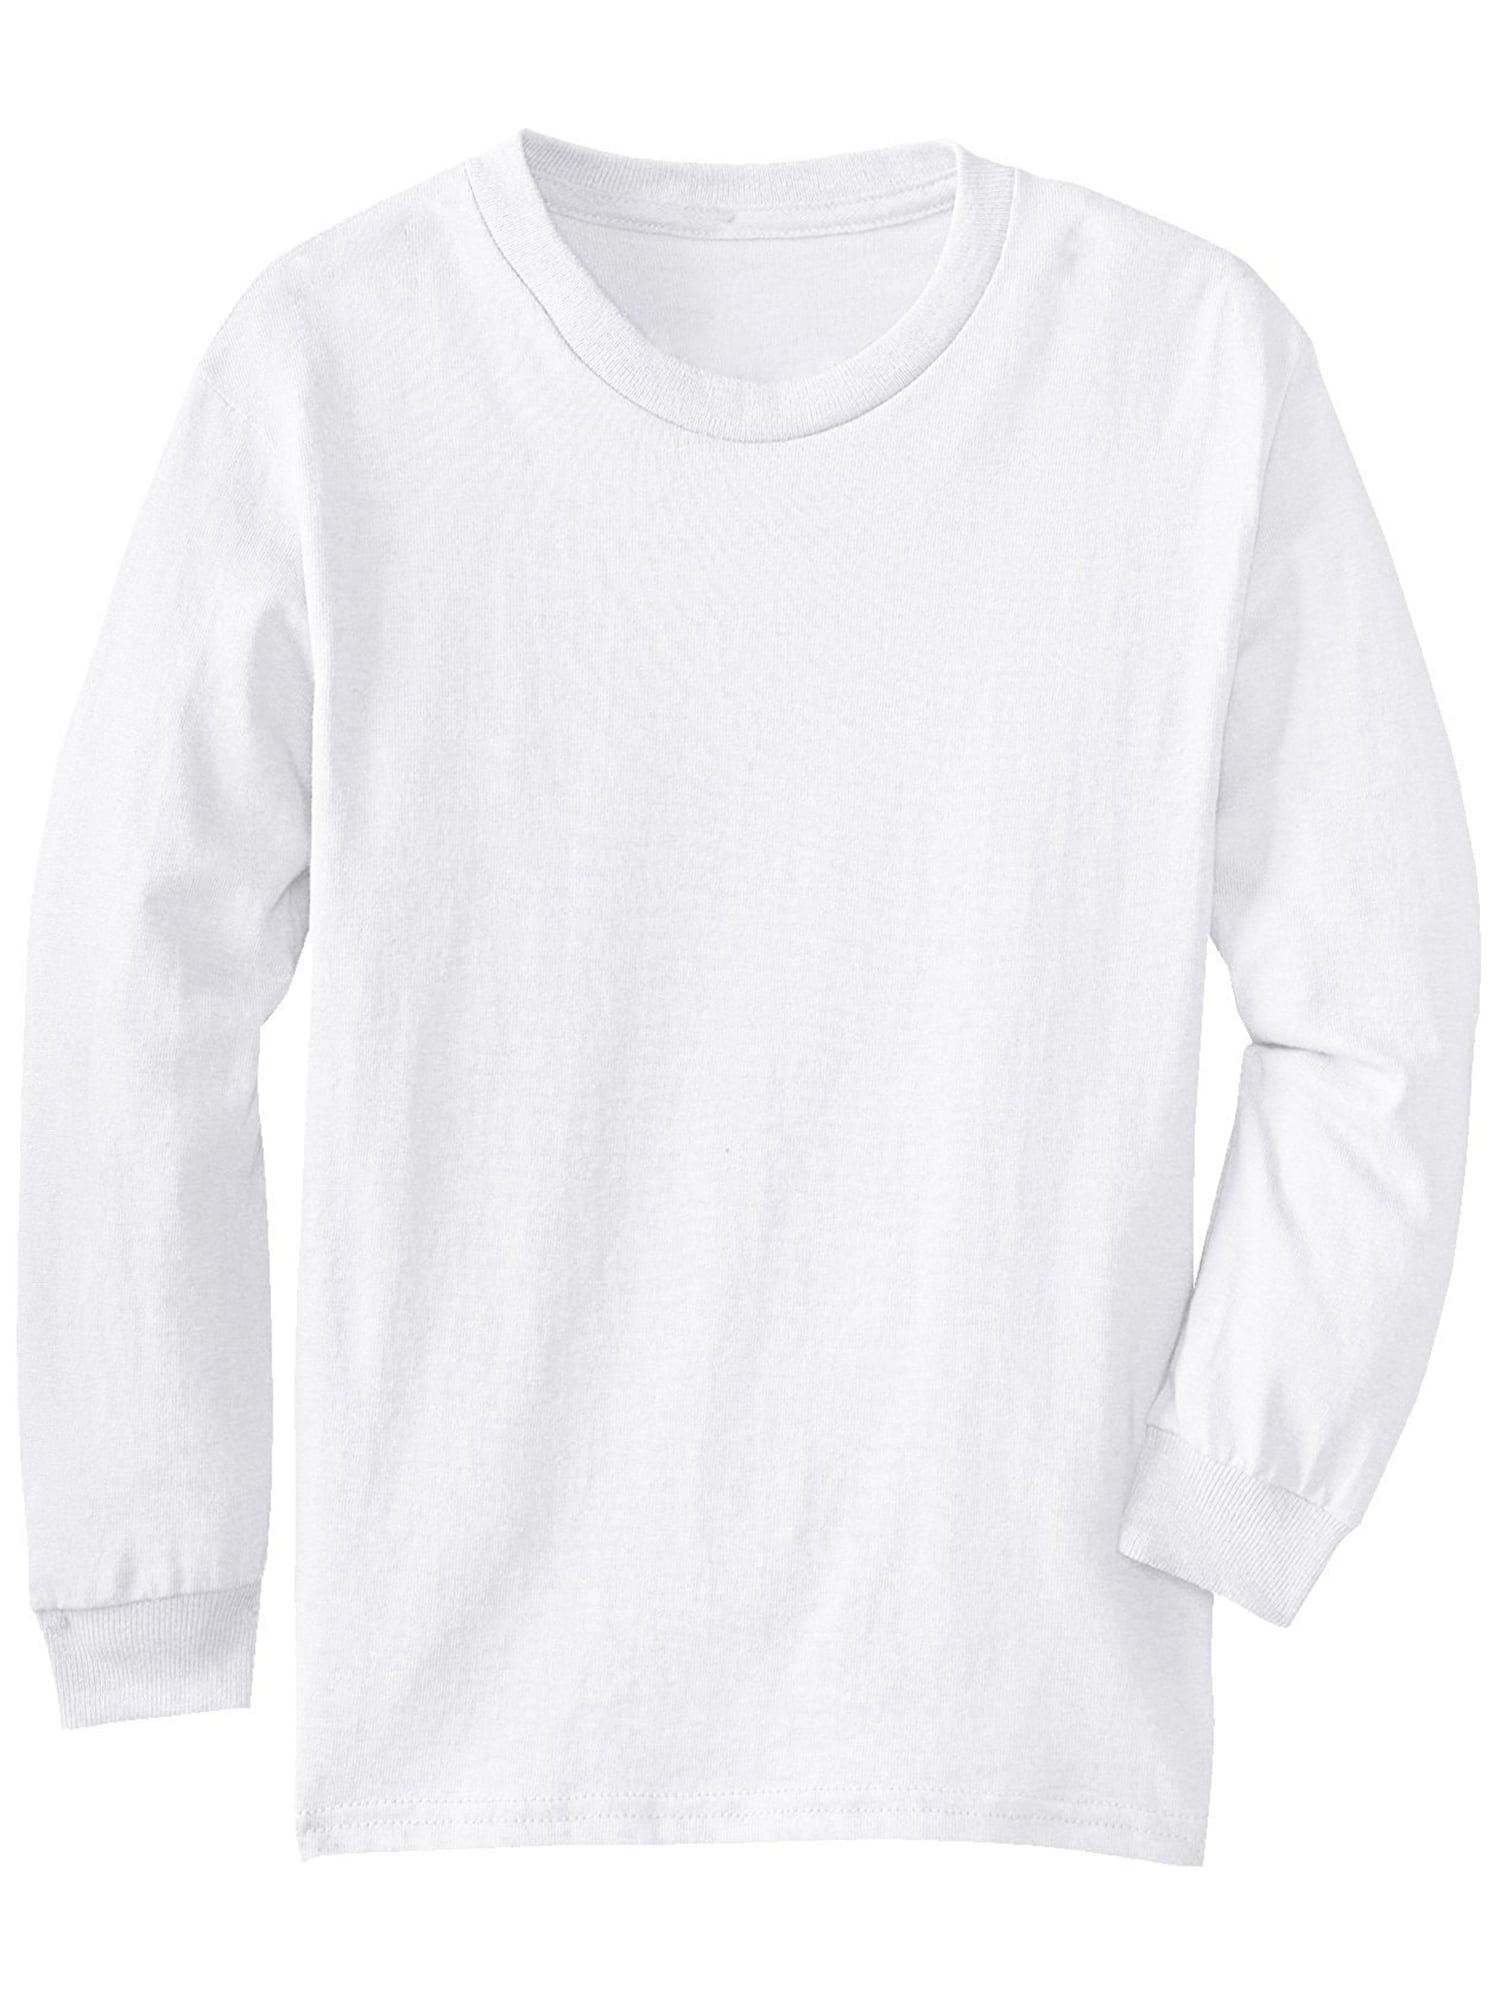 Unisex Kids Regular Fit Youth Long Sleeves Cotton Tshirt - Boys Girls 7 ...